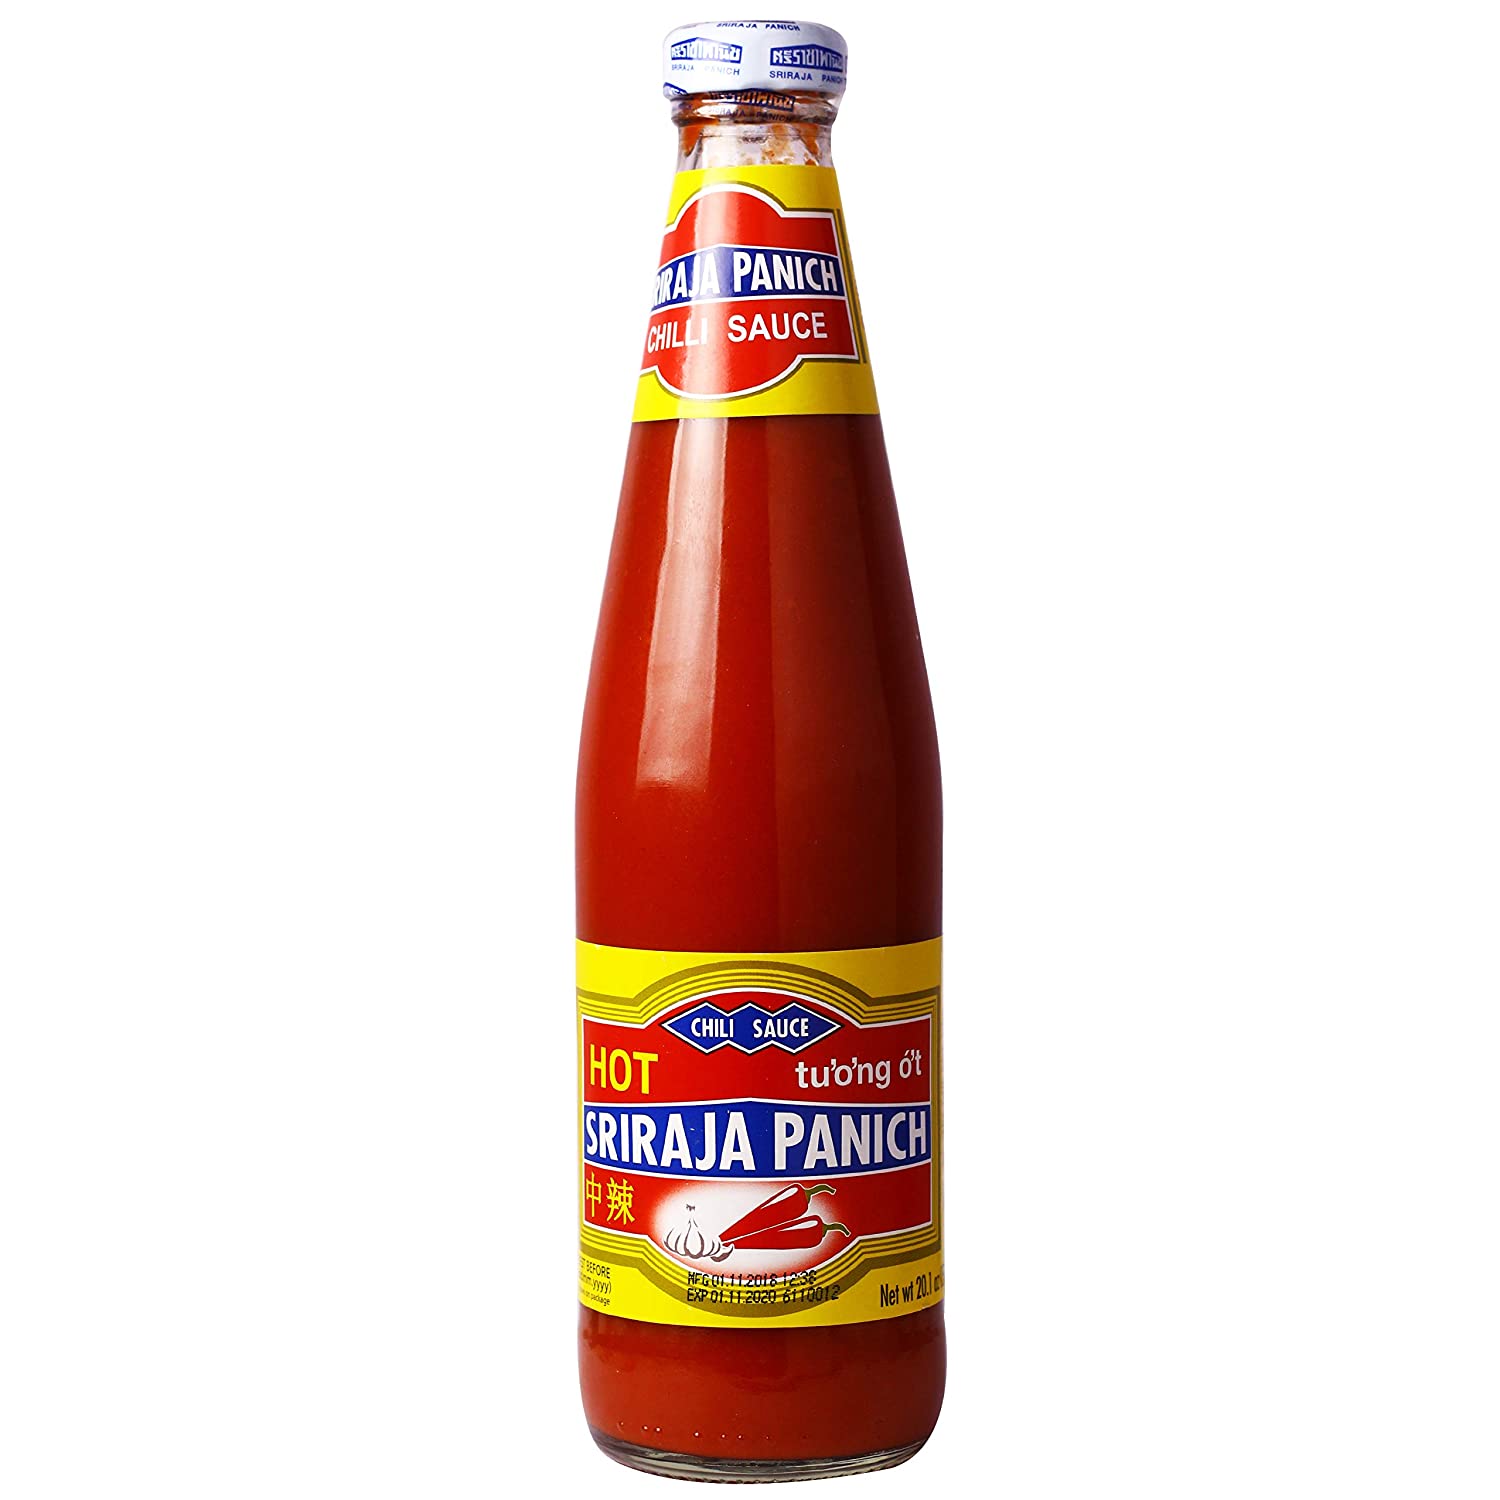 Hot Sriraja Panich Sauce 570 g